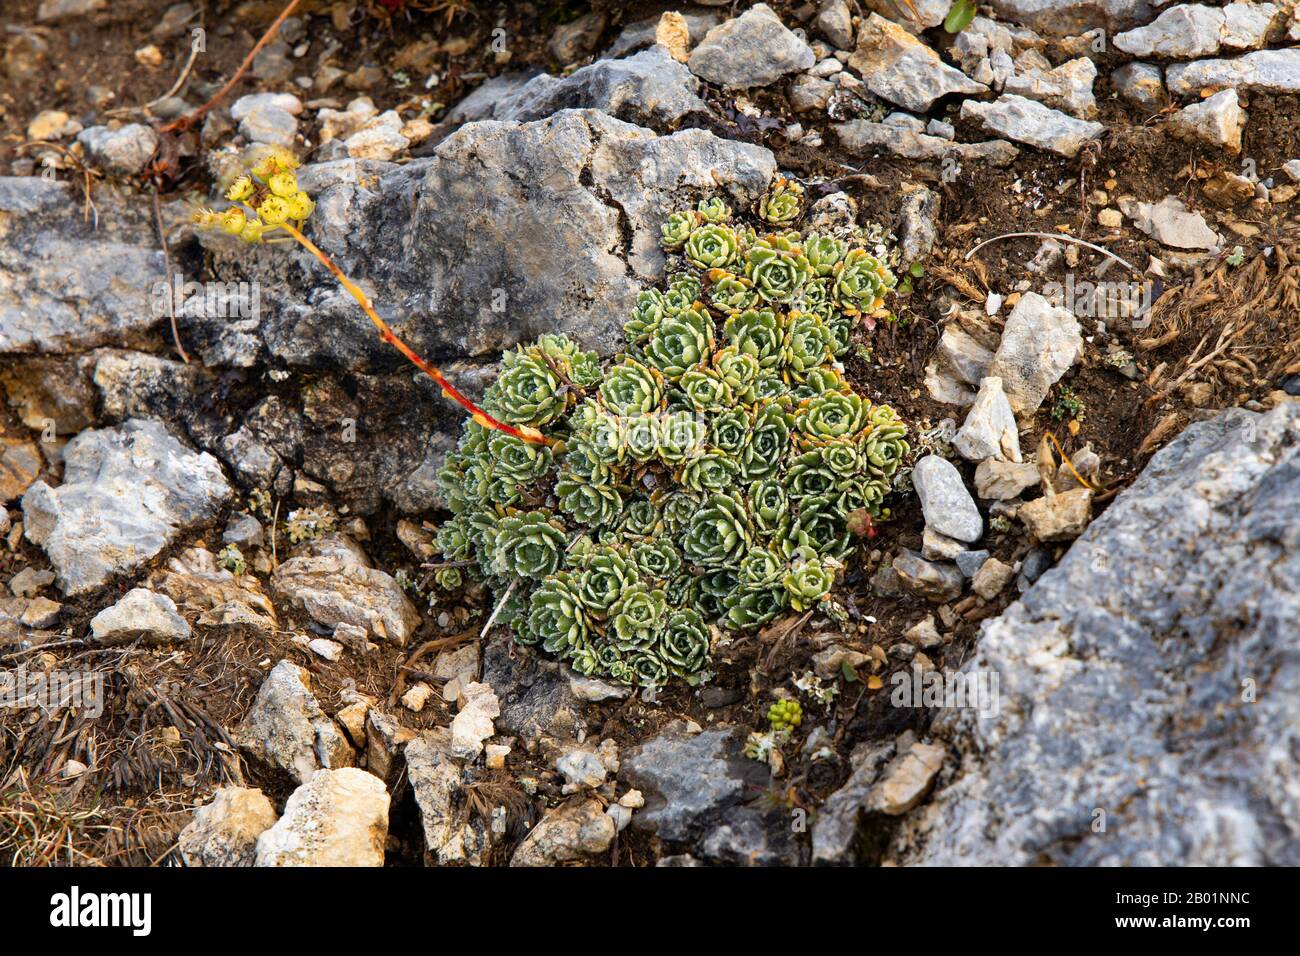 White mountain-saxifrage (Saxifraga paniculata), fruiting, Germany, Bavaria, Karwendel Mountains Stock Photo